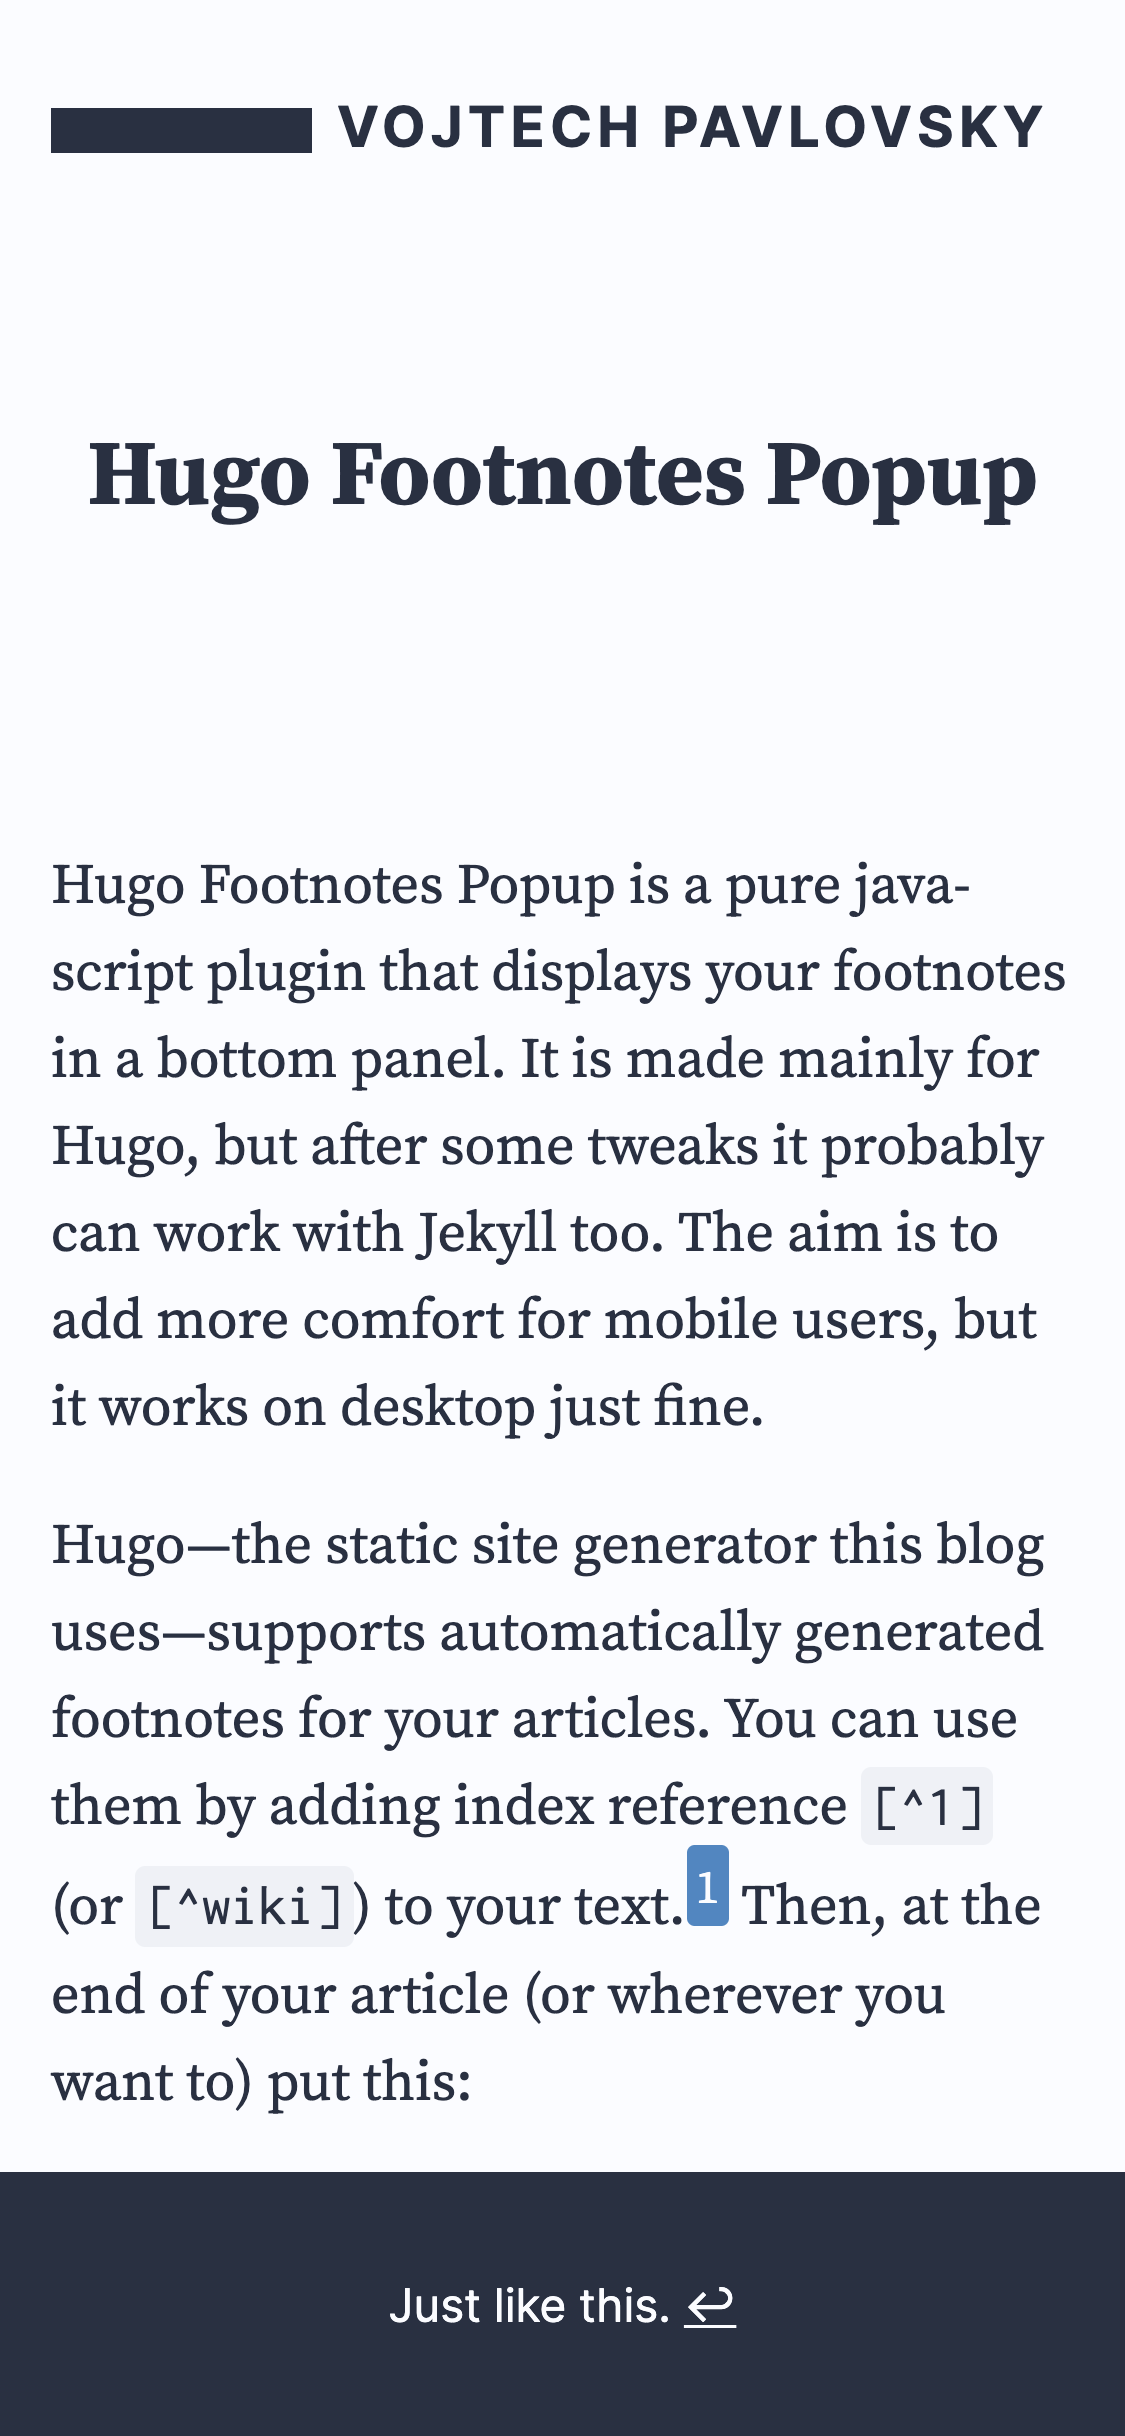 Hugo Footnotes Popup on mobile